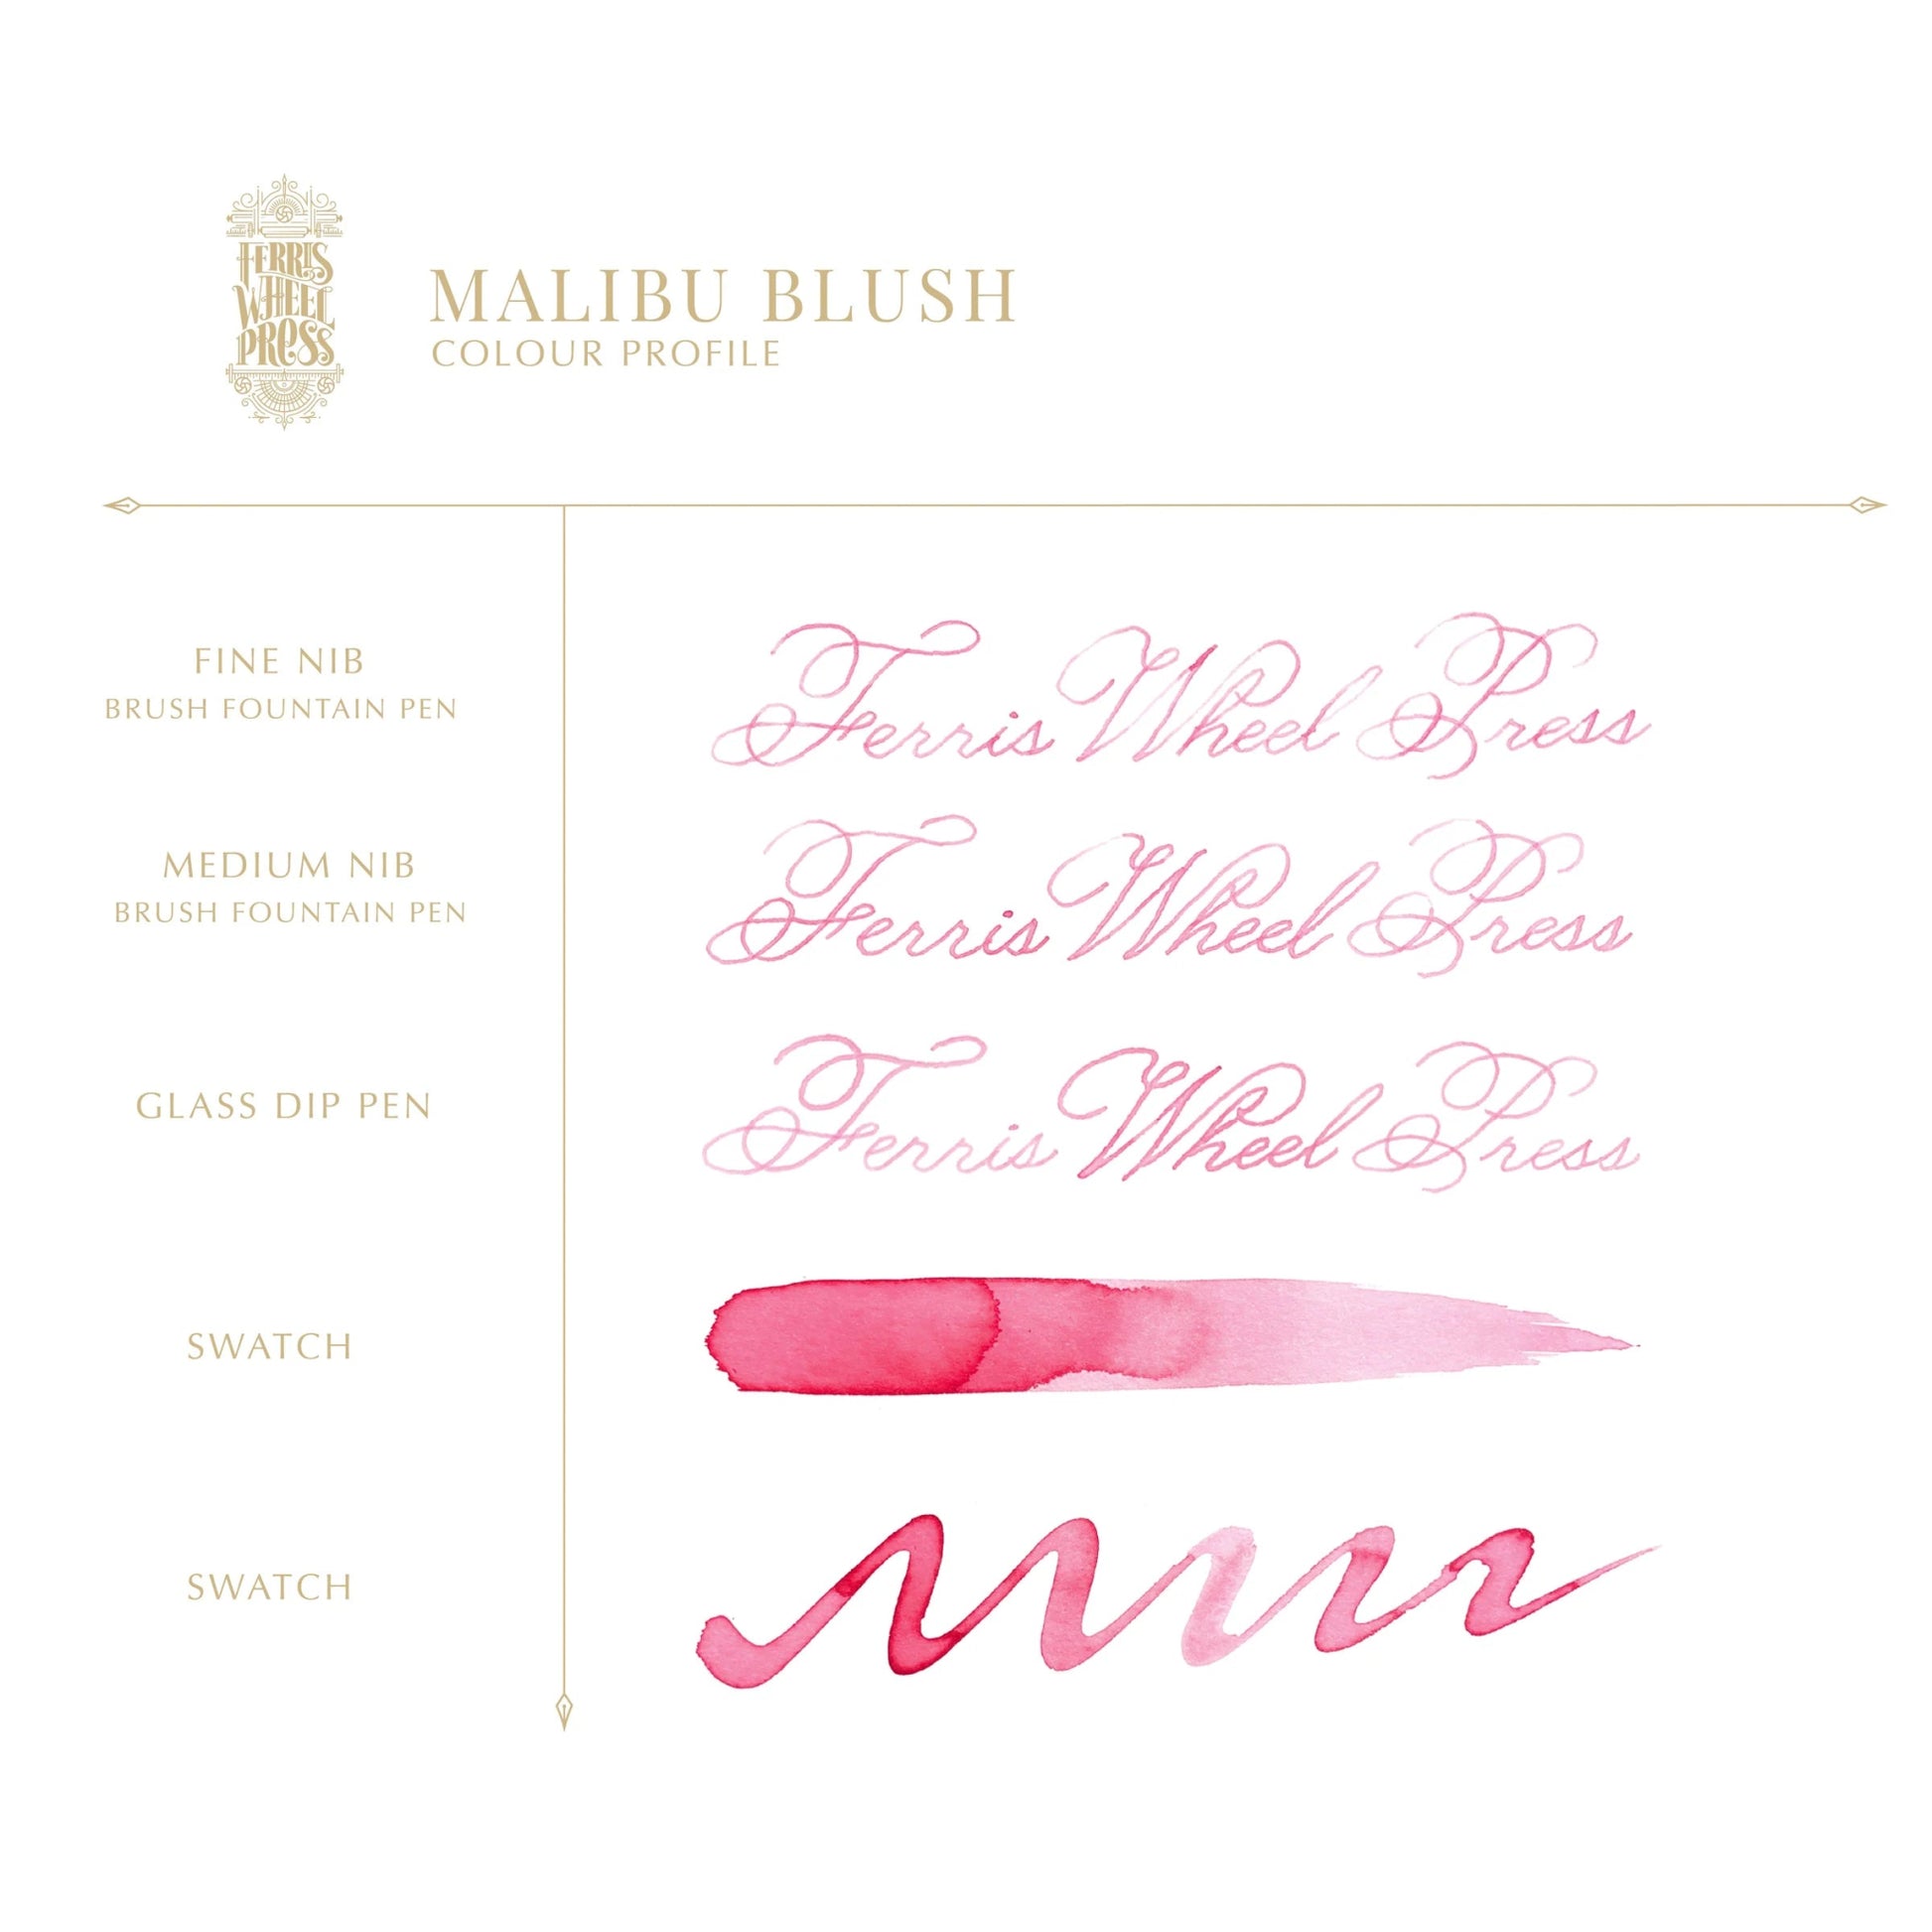 Ensemble Malibu Blush | Encre de couleur et un stylo plume Ferris Wheel Press - Ferris Wheel Press - millenotes